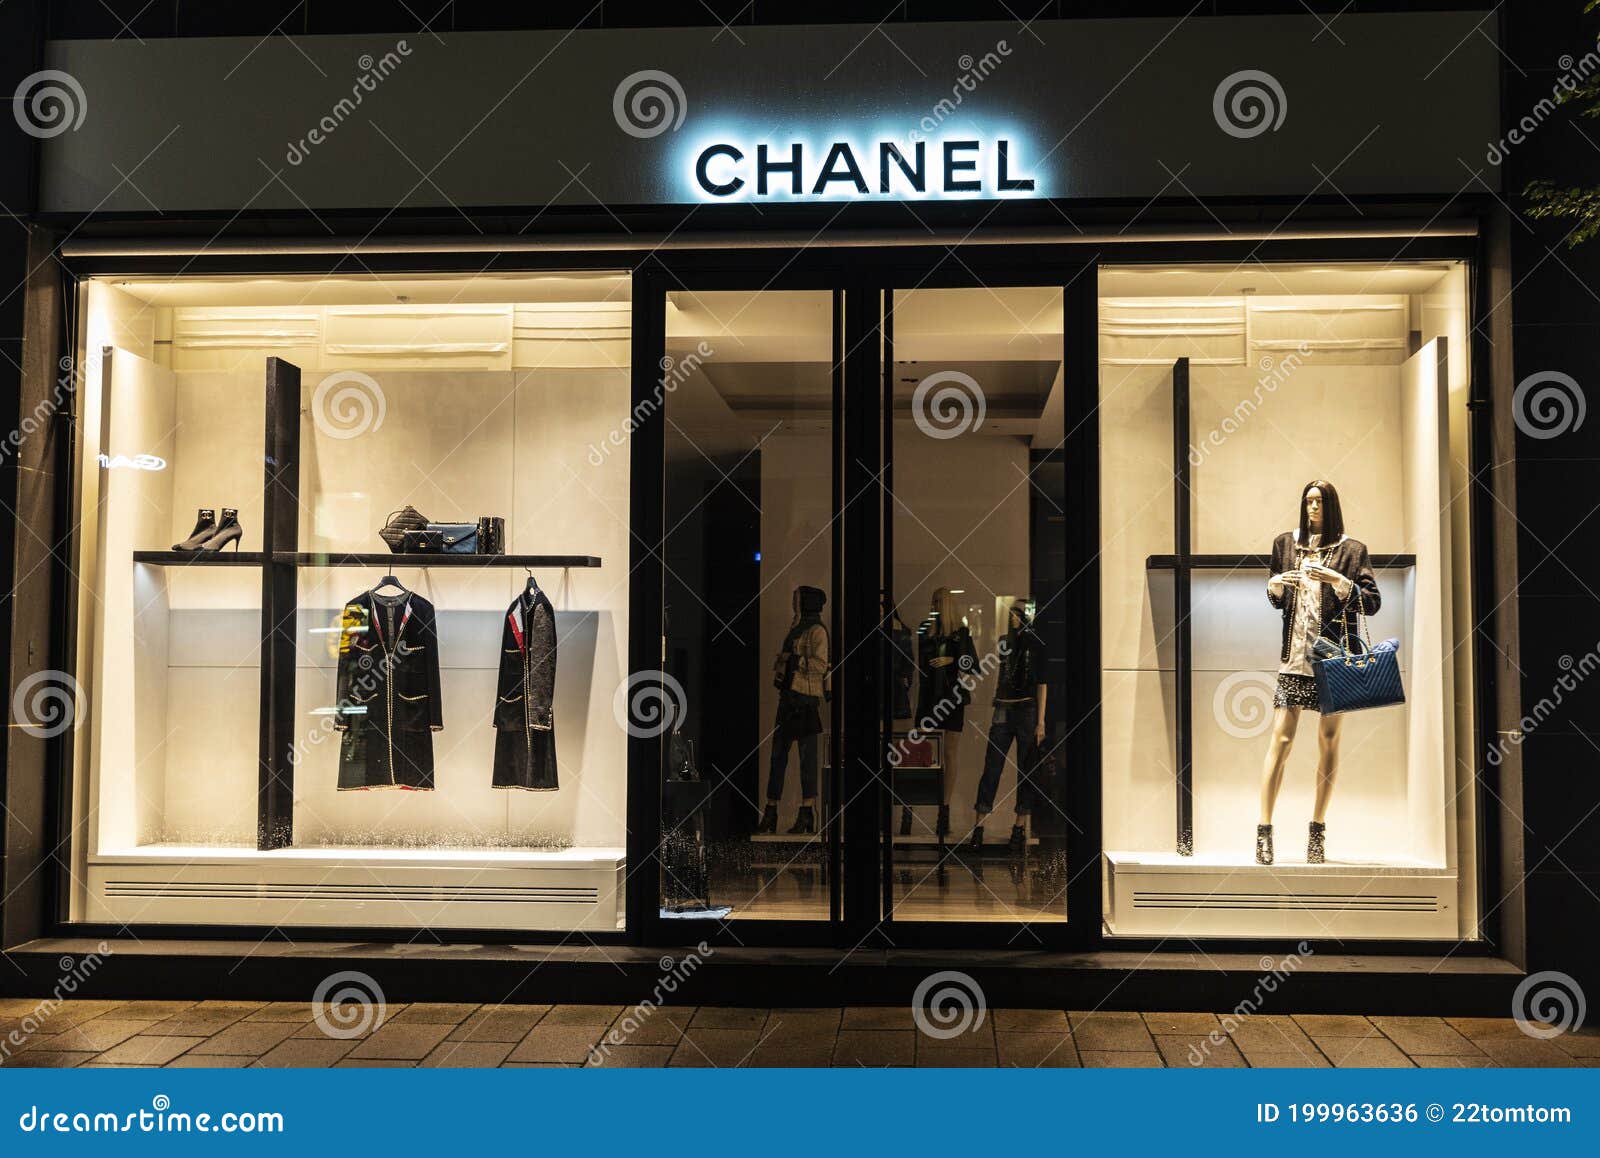 Cyclops manipulere ledig stilling Chanel Luxury Clothing Store at Night in Hamburg, Germany Editorial Photo -  Image of fashion, neuer: 199963636